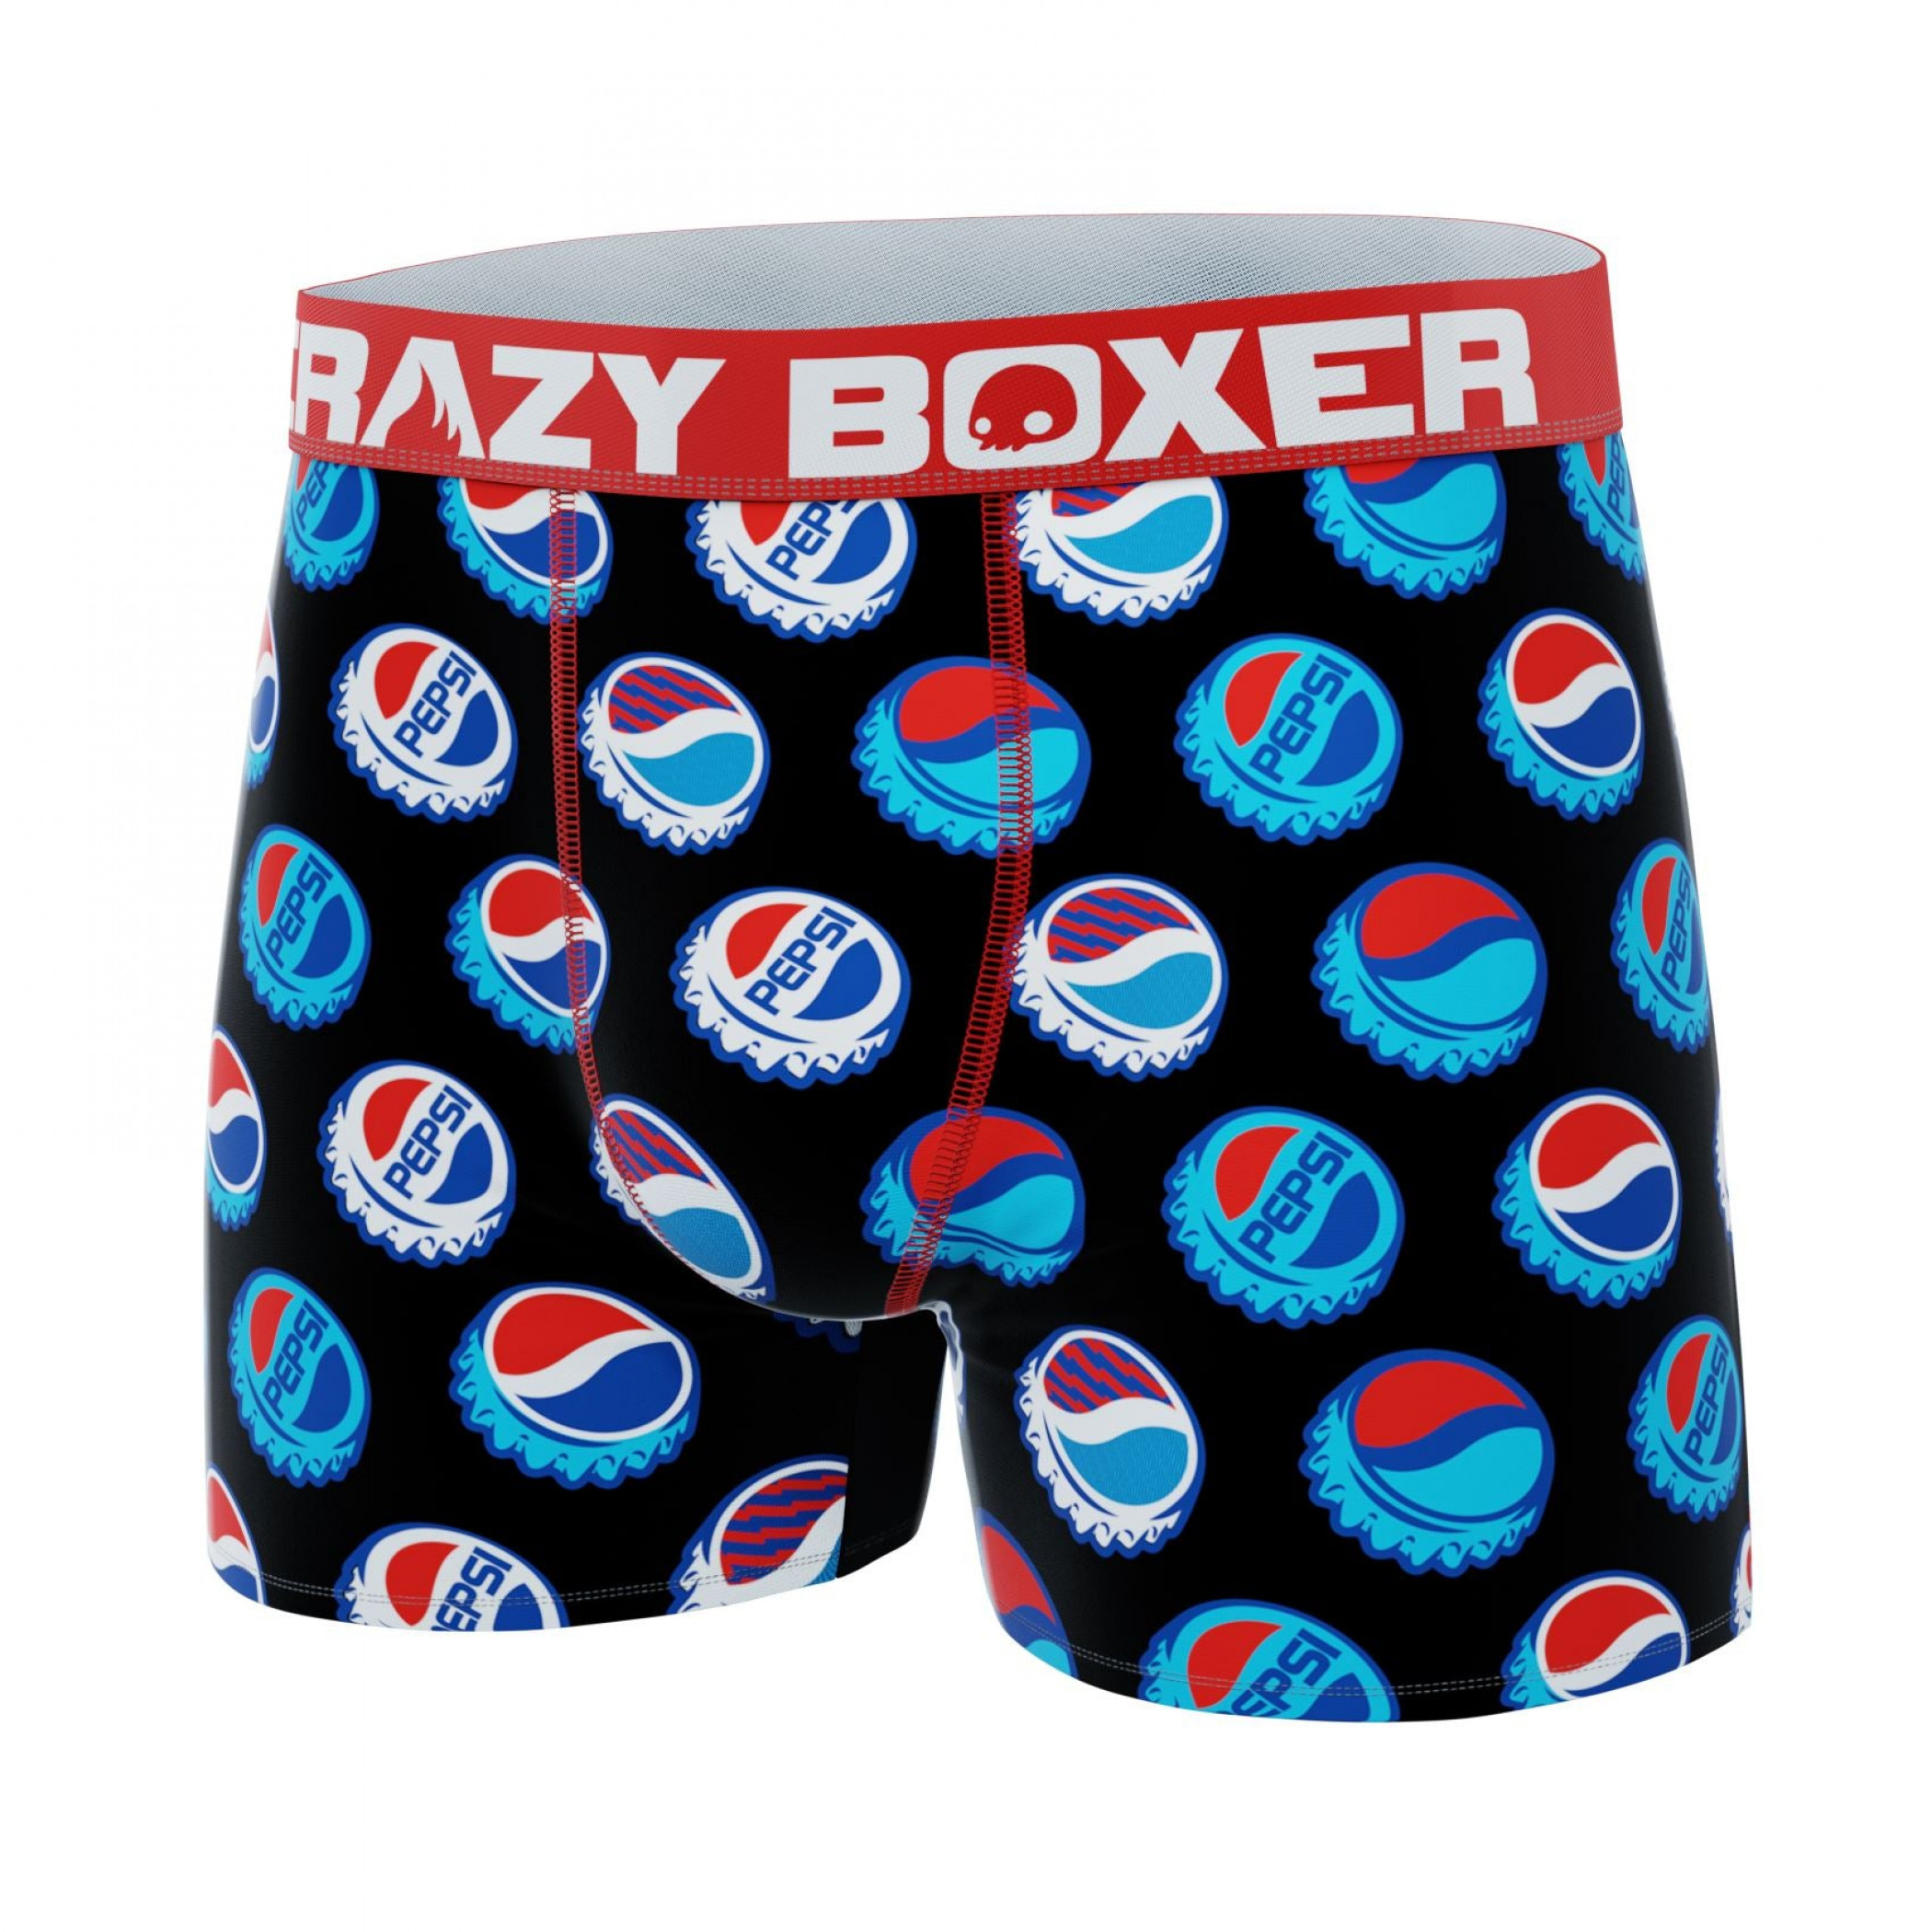 Crazy Boxer Pepsi Cola Logo Bottle Caps All Over Print Men's Boxer Briefs